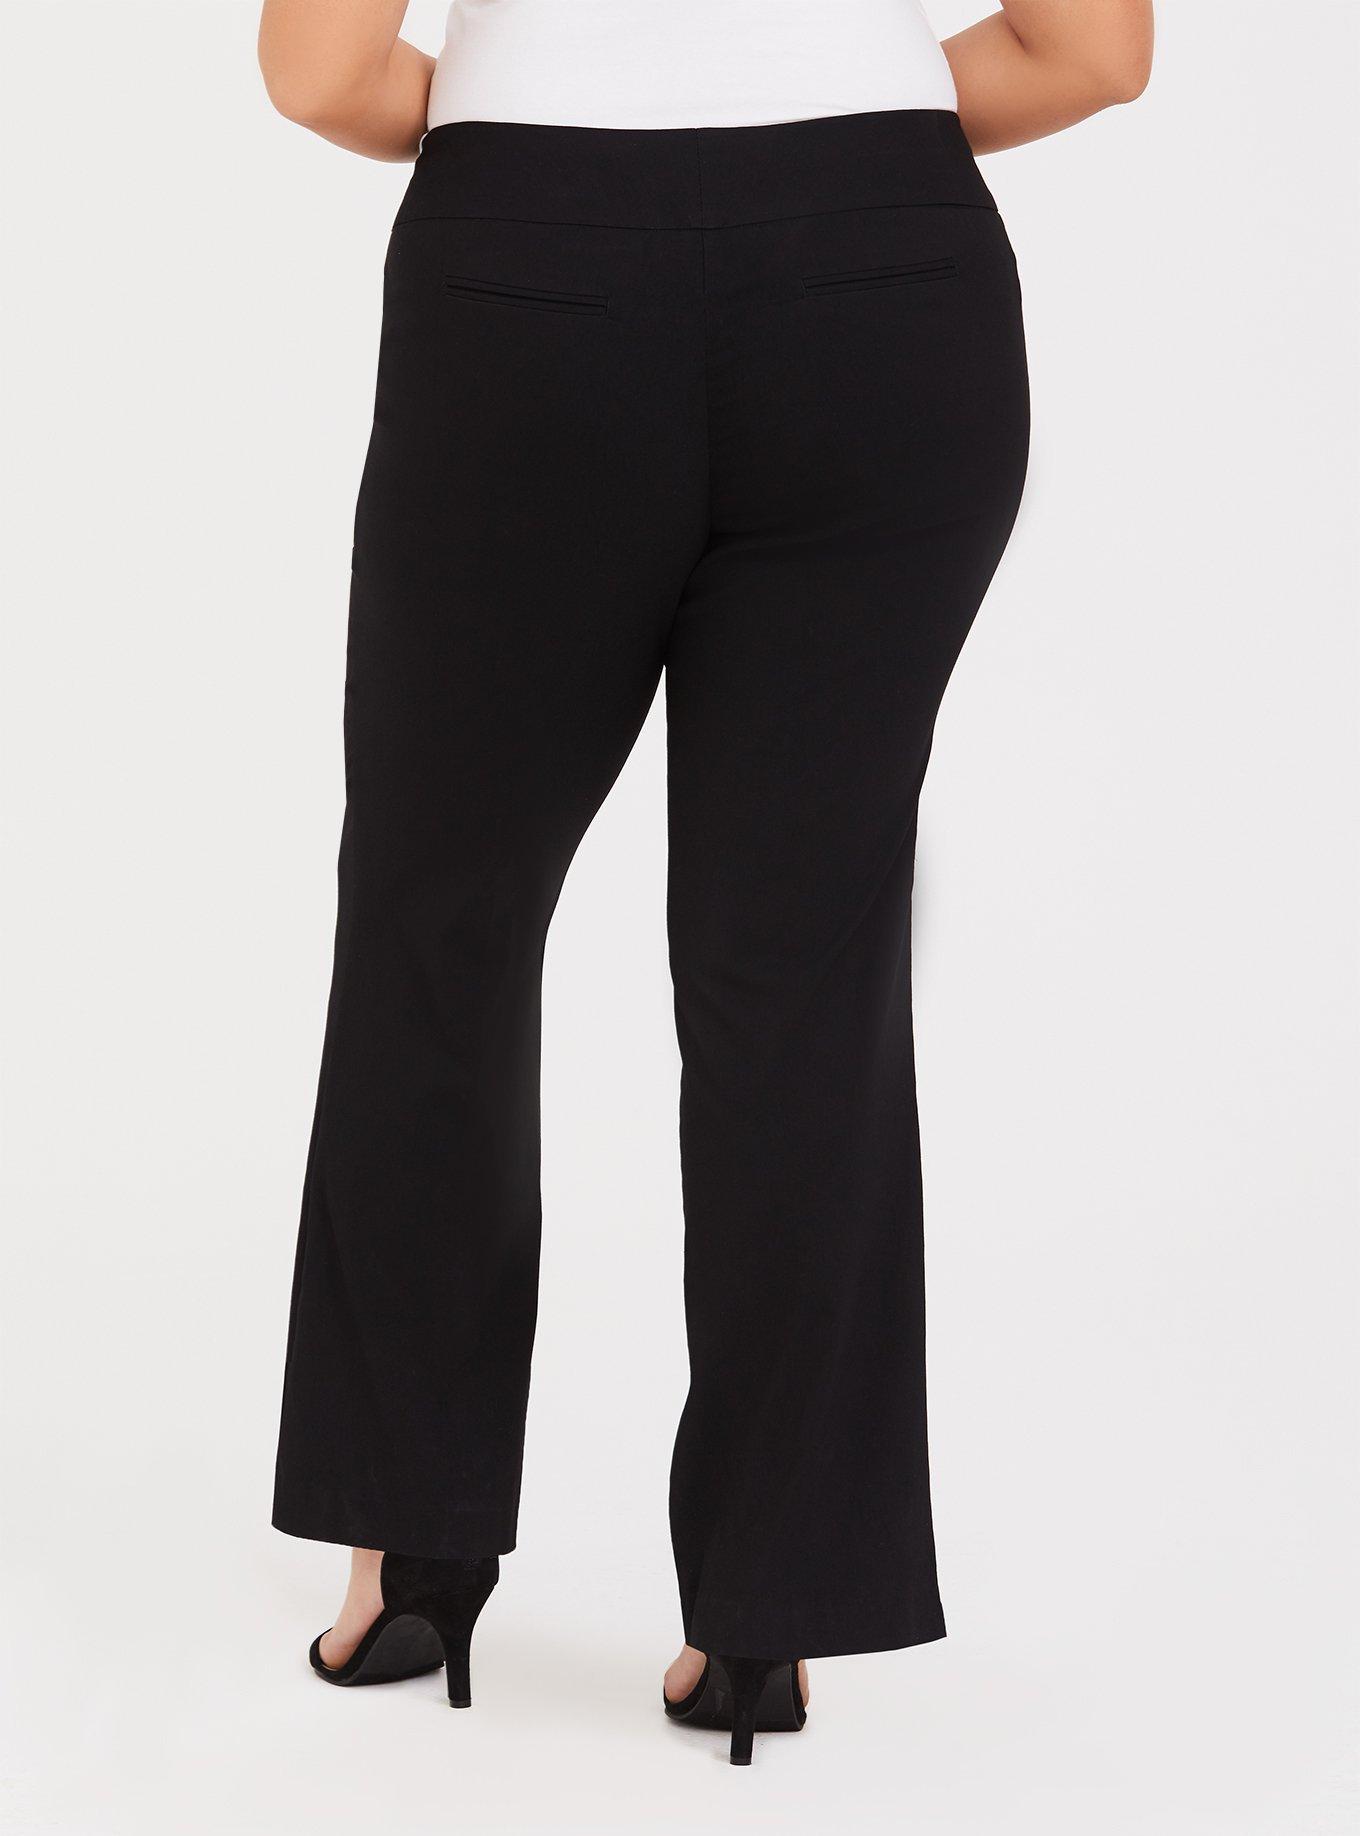 Plus Size - Black Relaxed Trouser Pant - Torrid